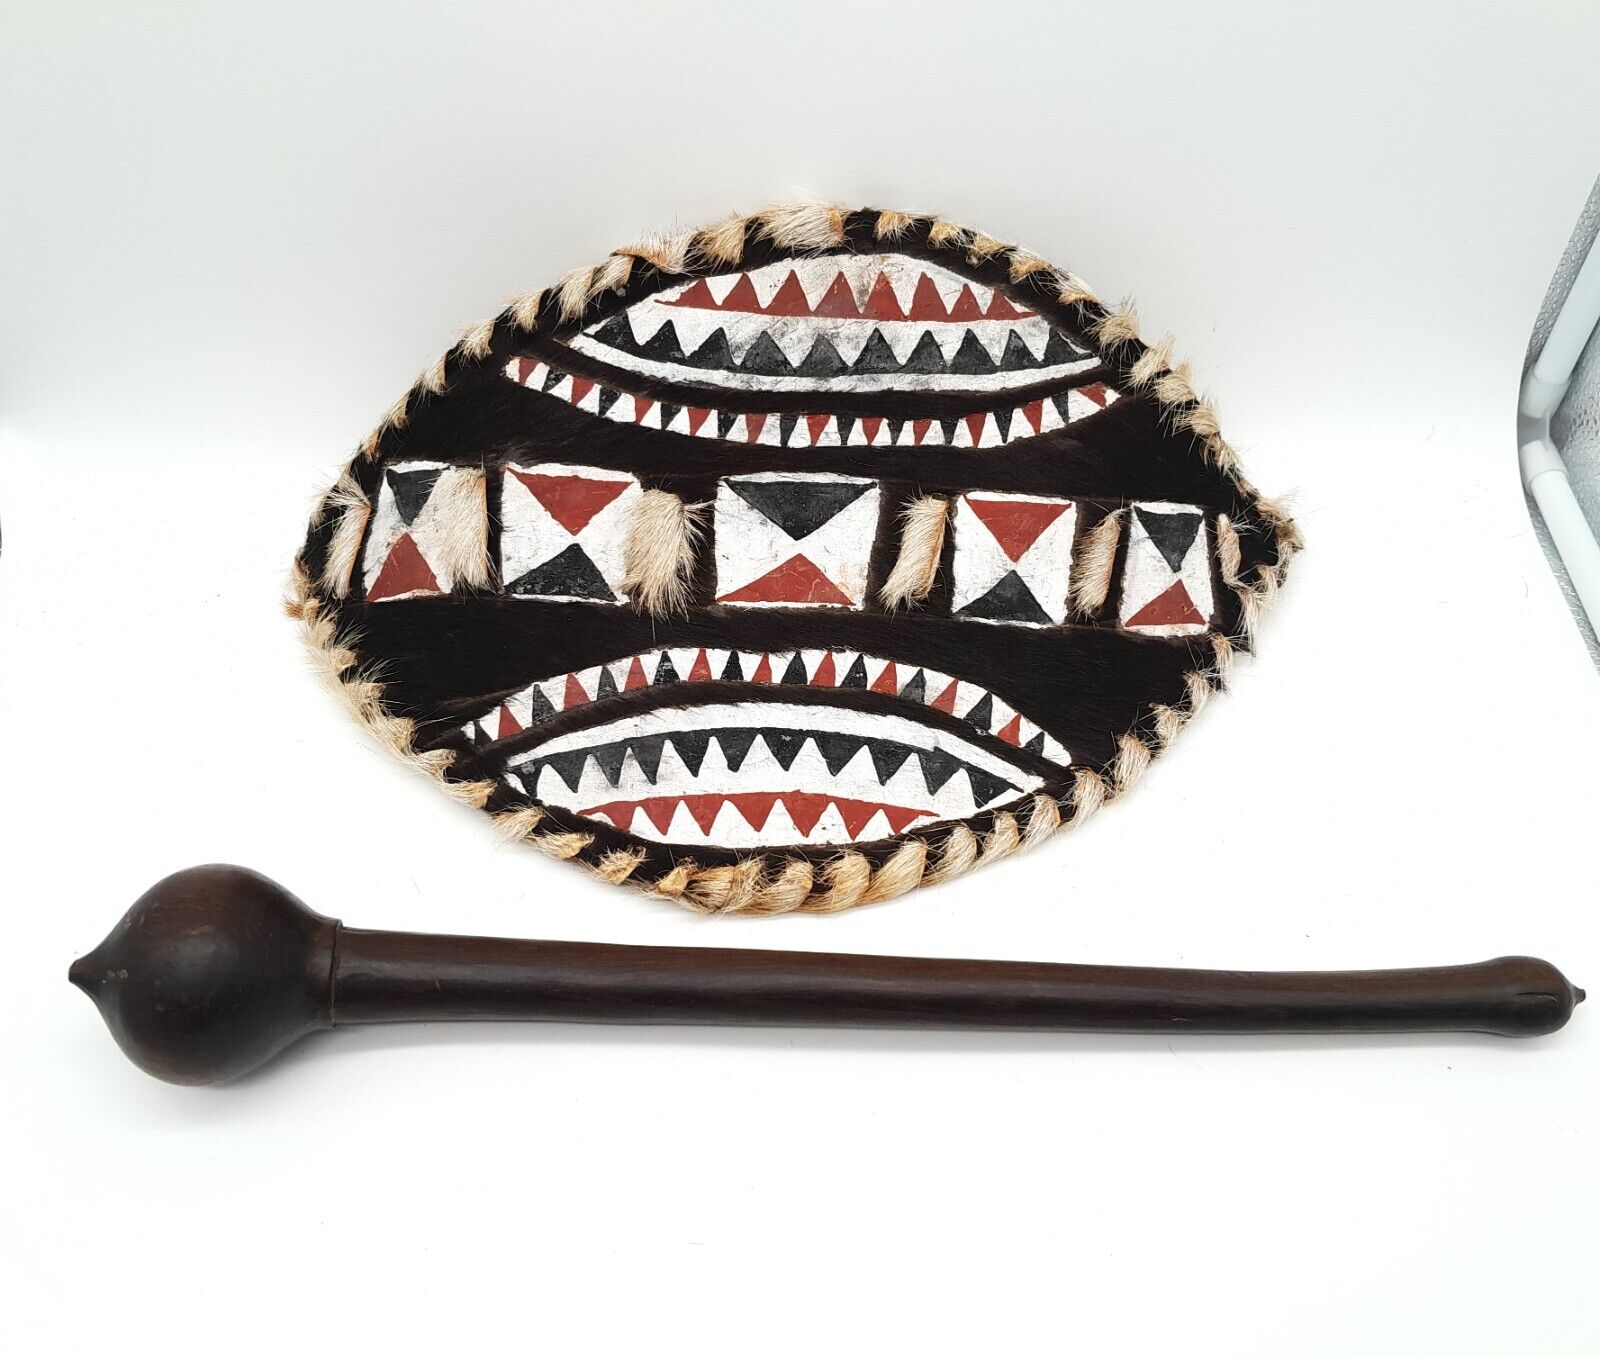 SALE Handmade African Maasai Warrior Set, Small Shield/Rungu (club), Kenya